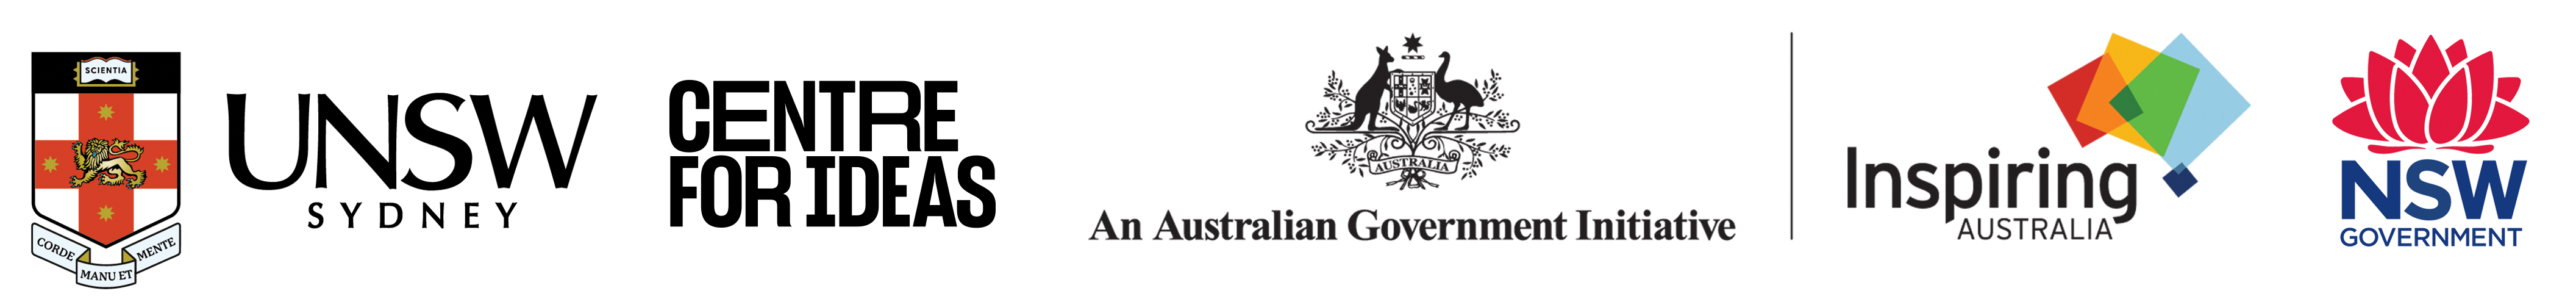 Centre for Ideas, Inspiring Australia and NSW Government logos